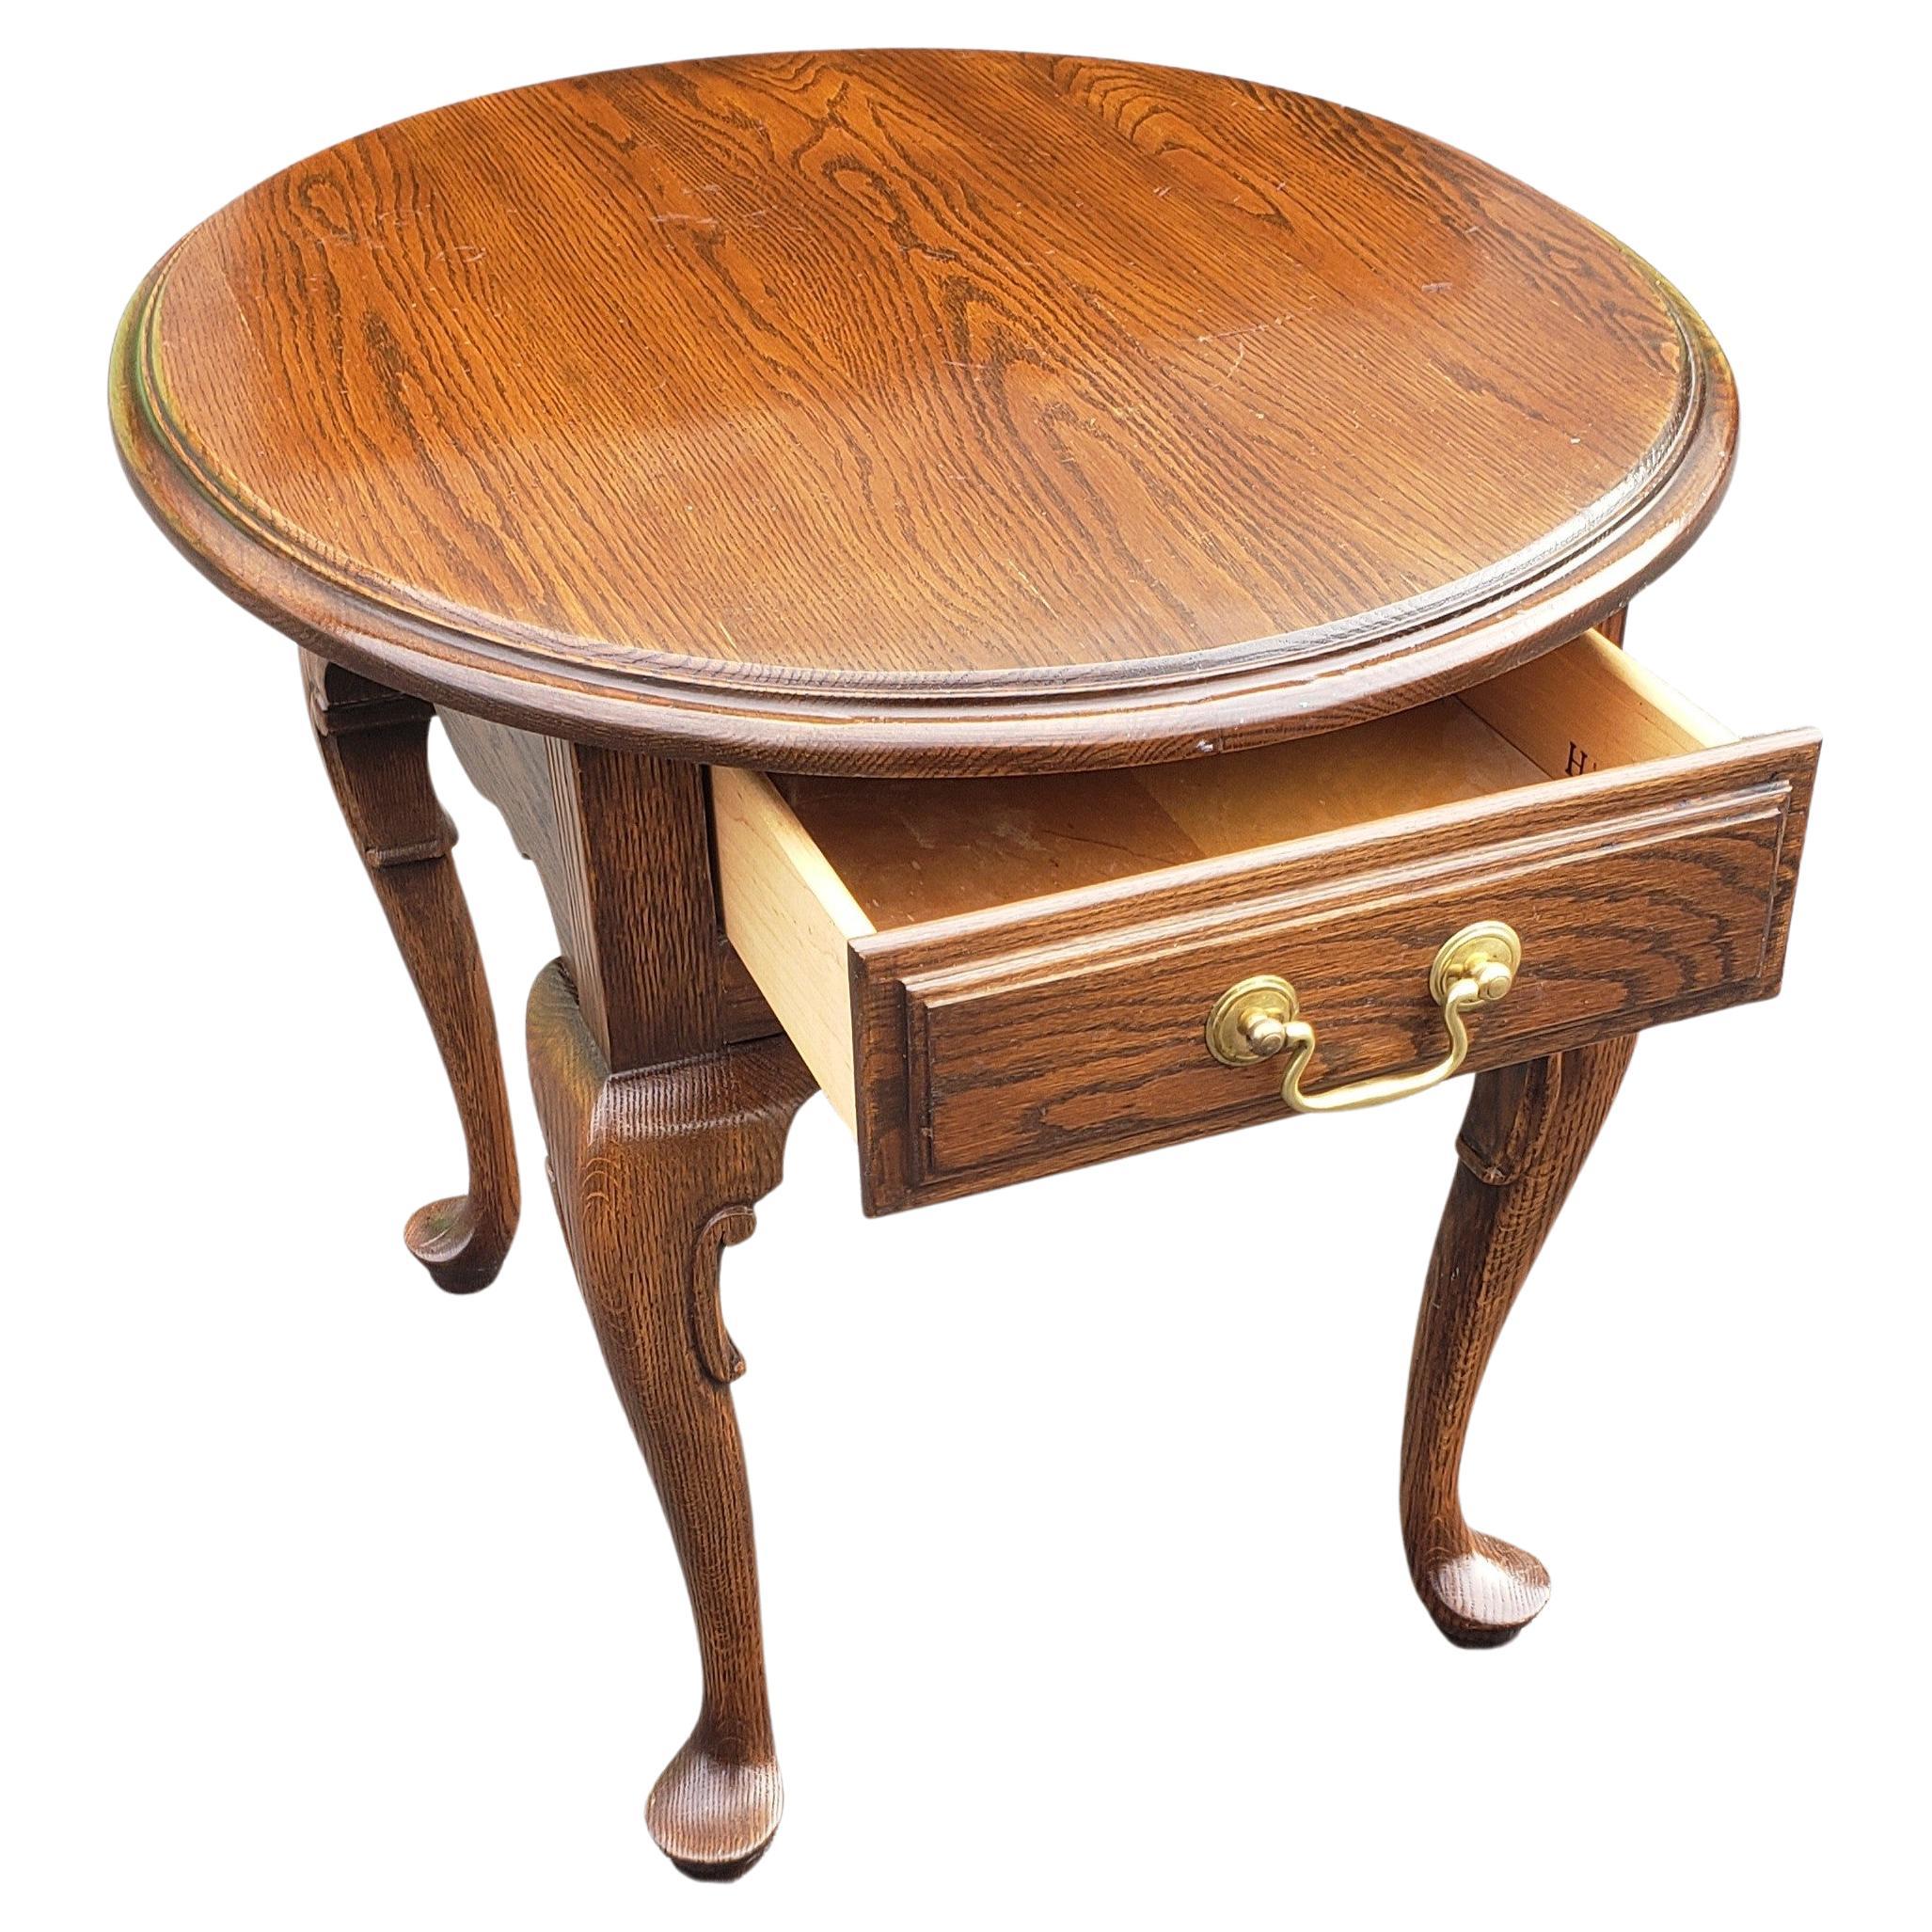 Harden solid oak single drawer oval side table measuring 24.5